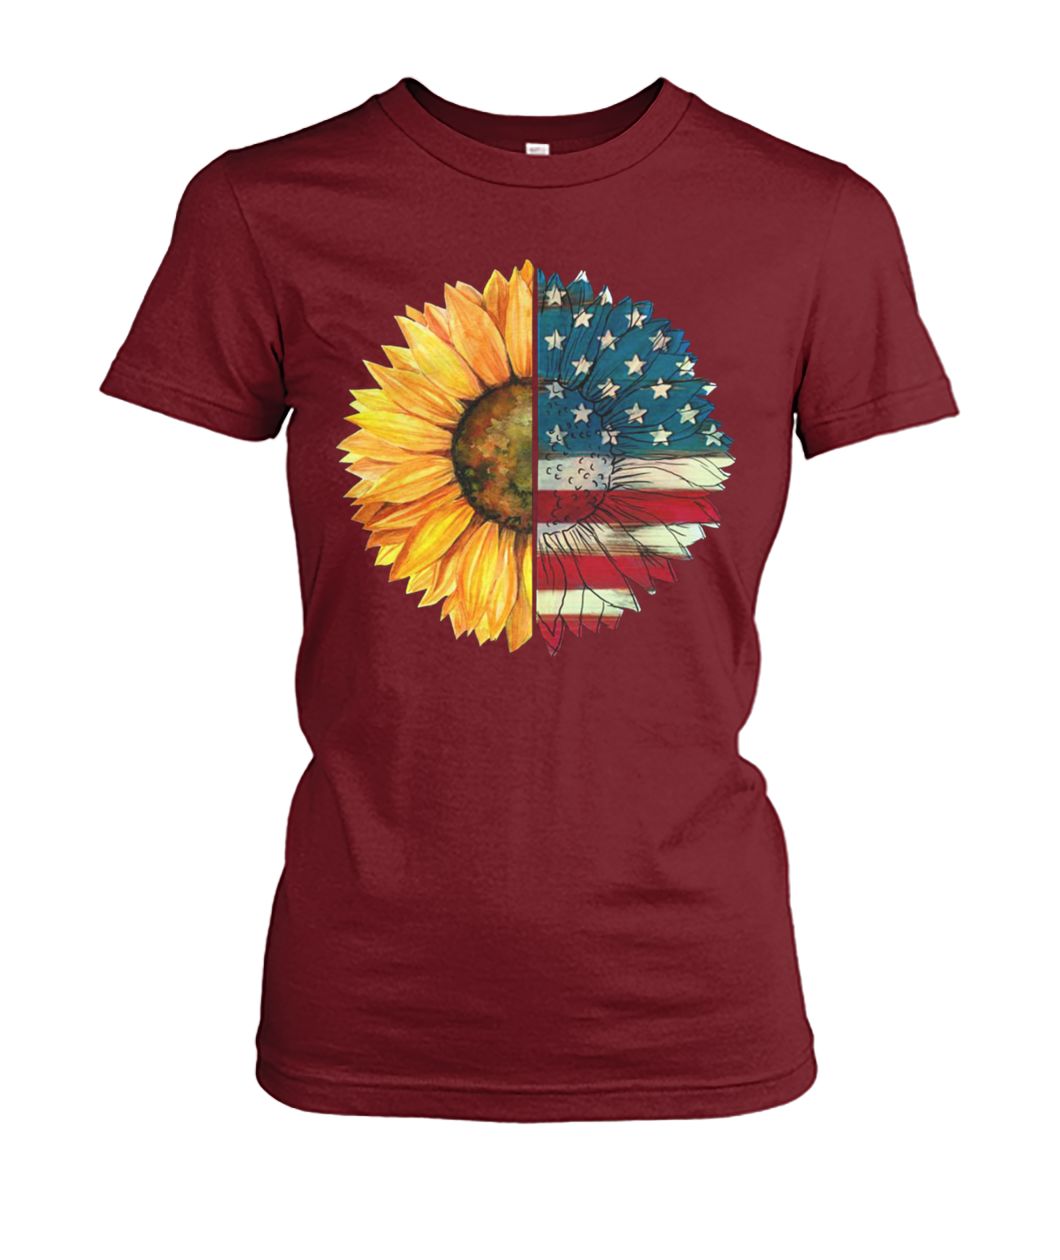 4th of july american flag sunflower women's crew tee